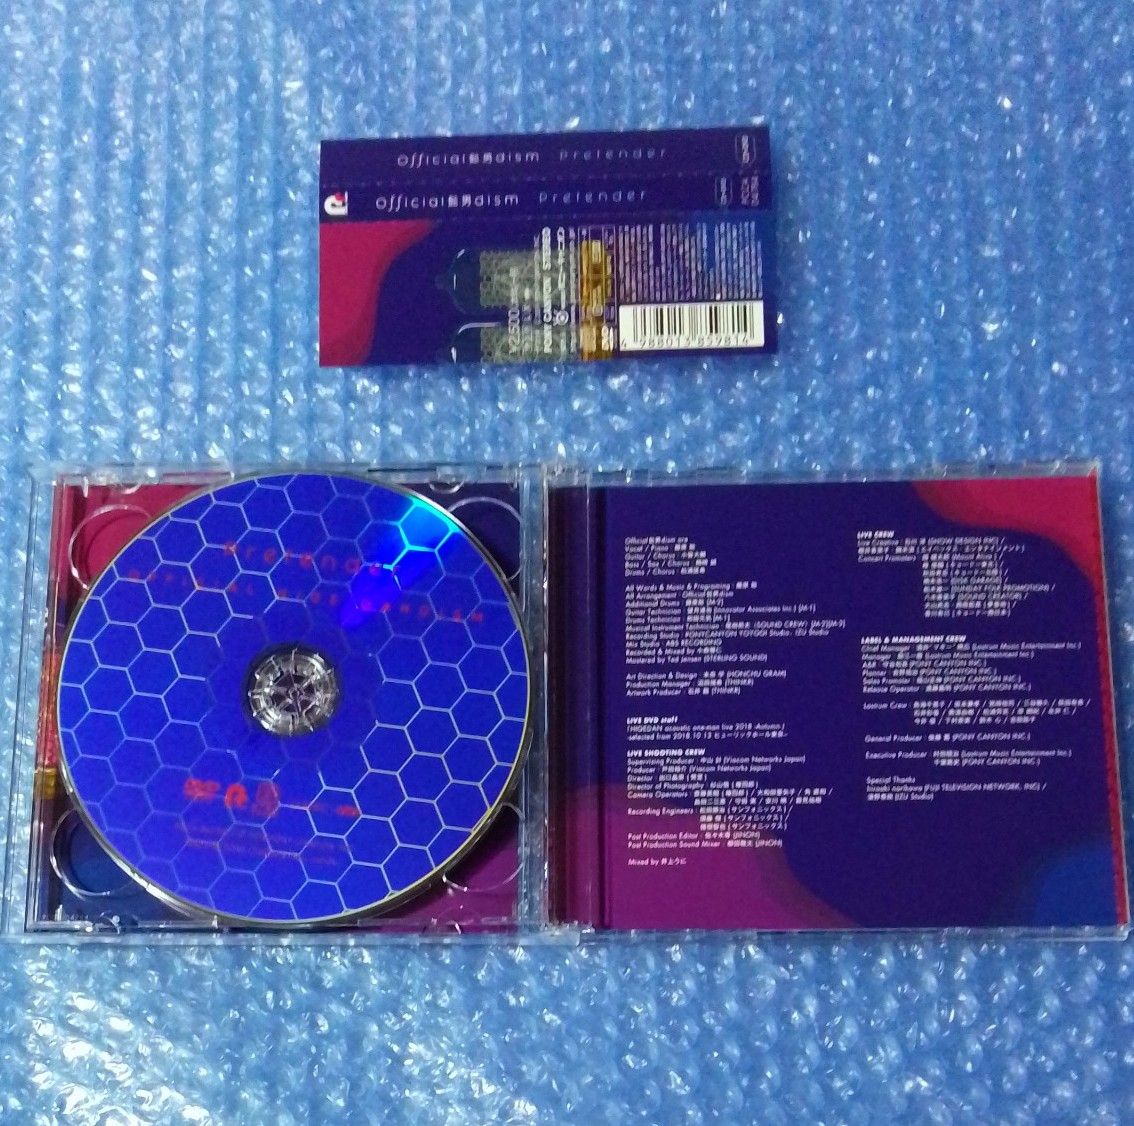 Official髭男dism Pretender 初回限定盤 CD+DVD